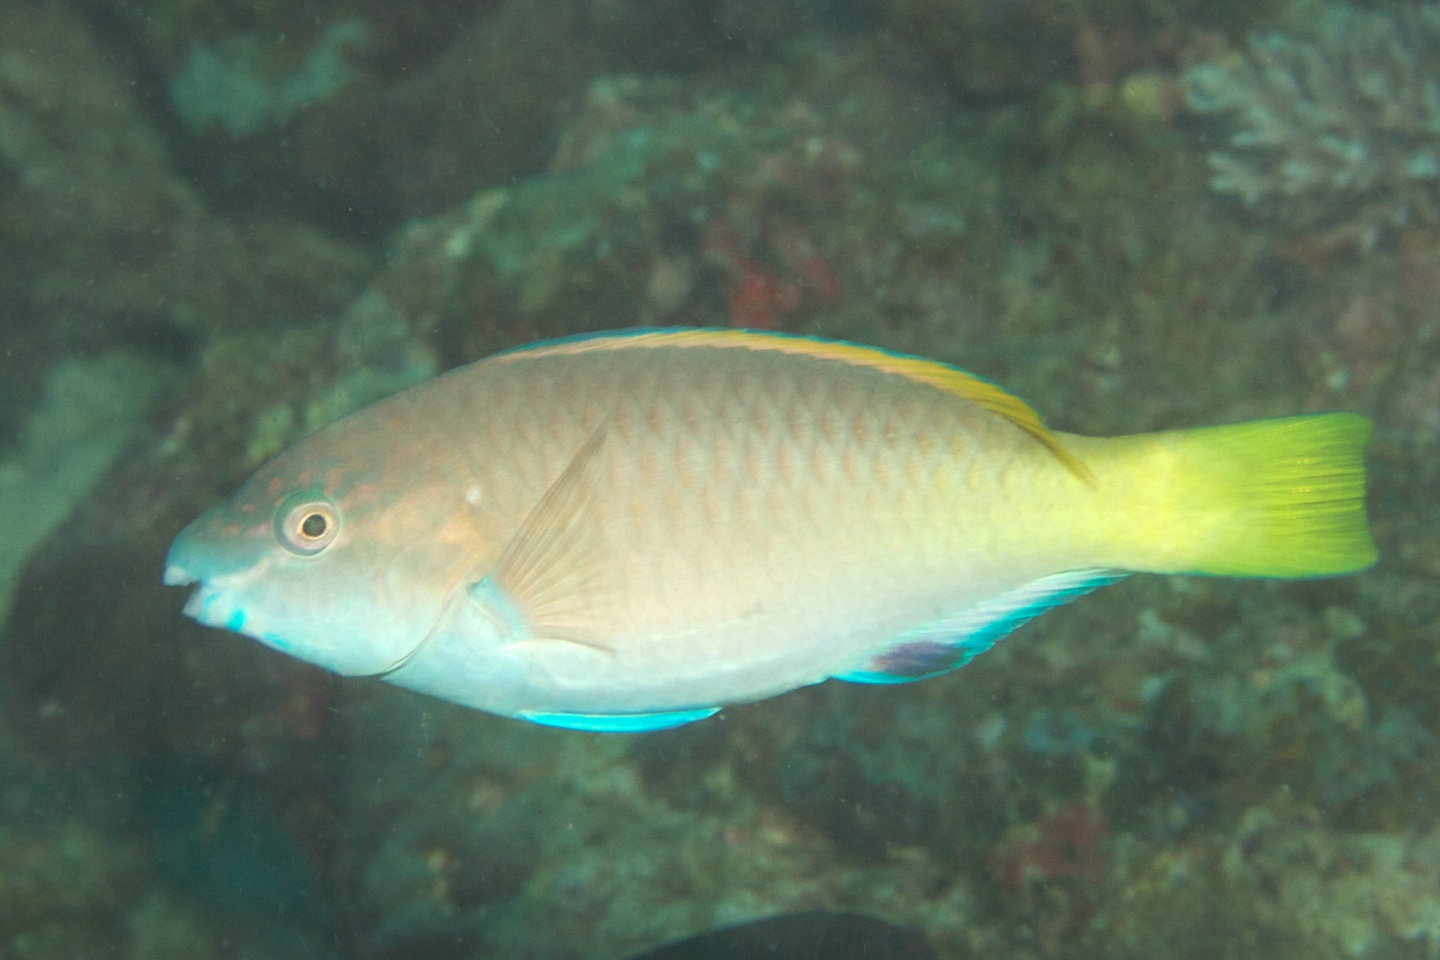 East indies parrotfish